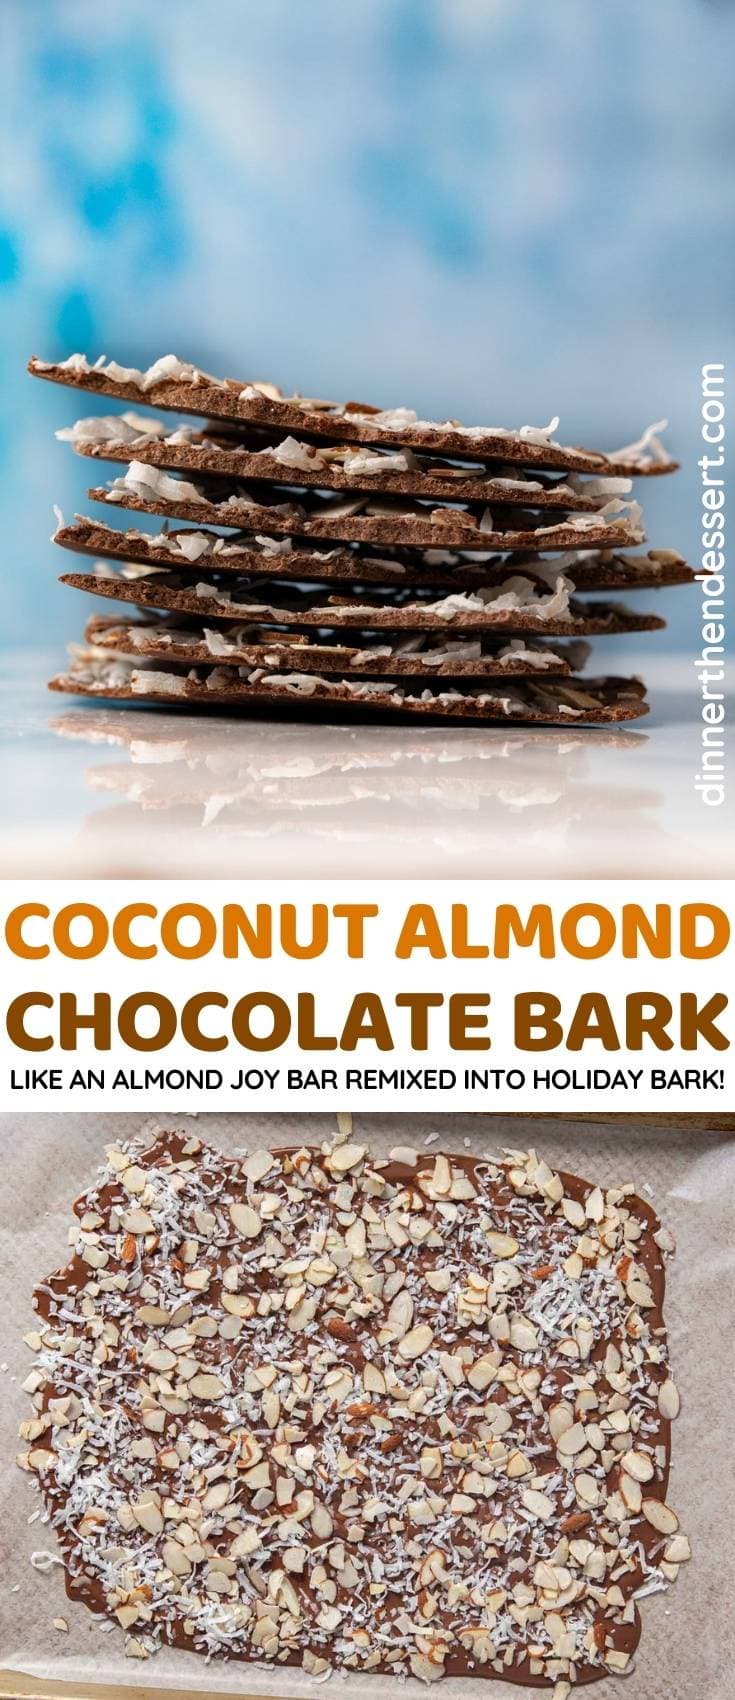 Coconut Almond Chocolate Bark collage